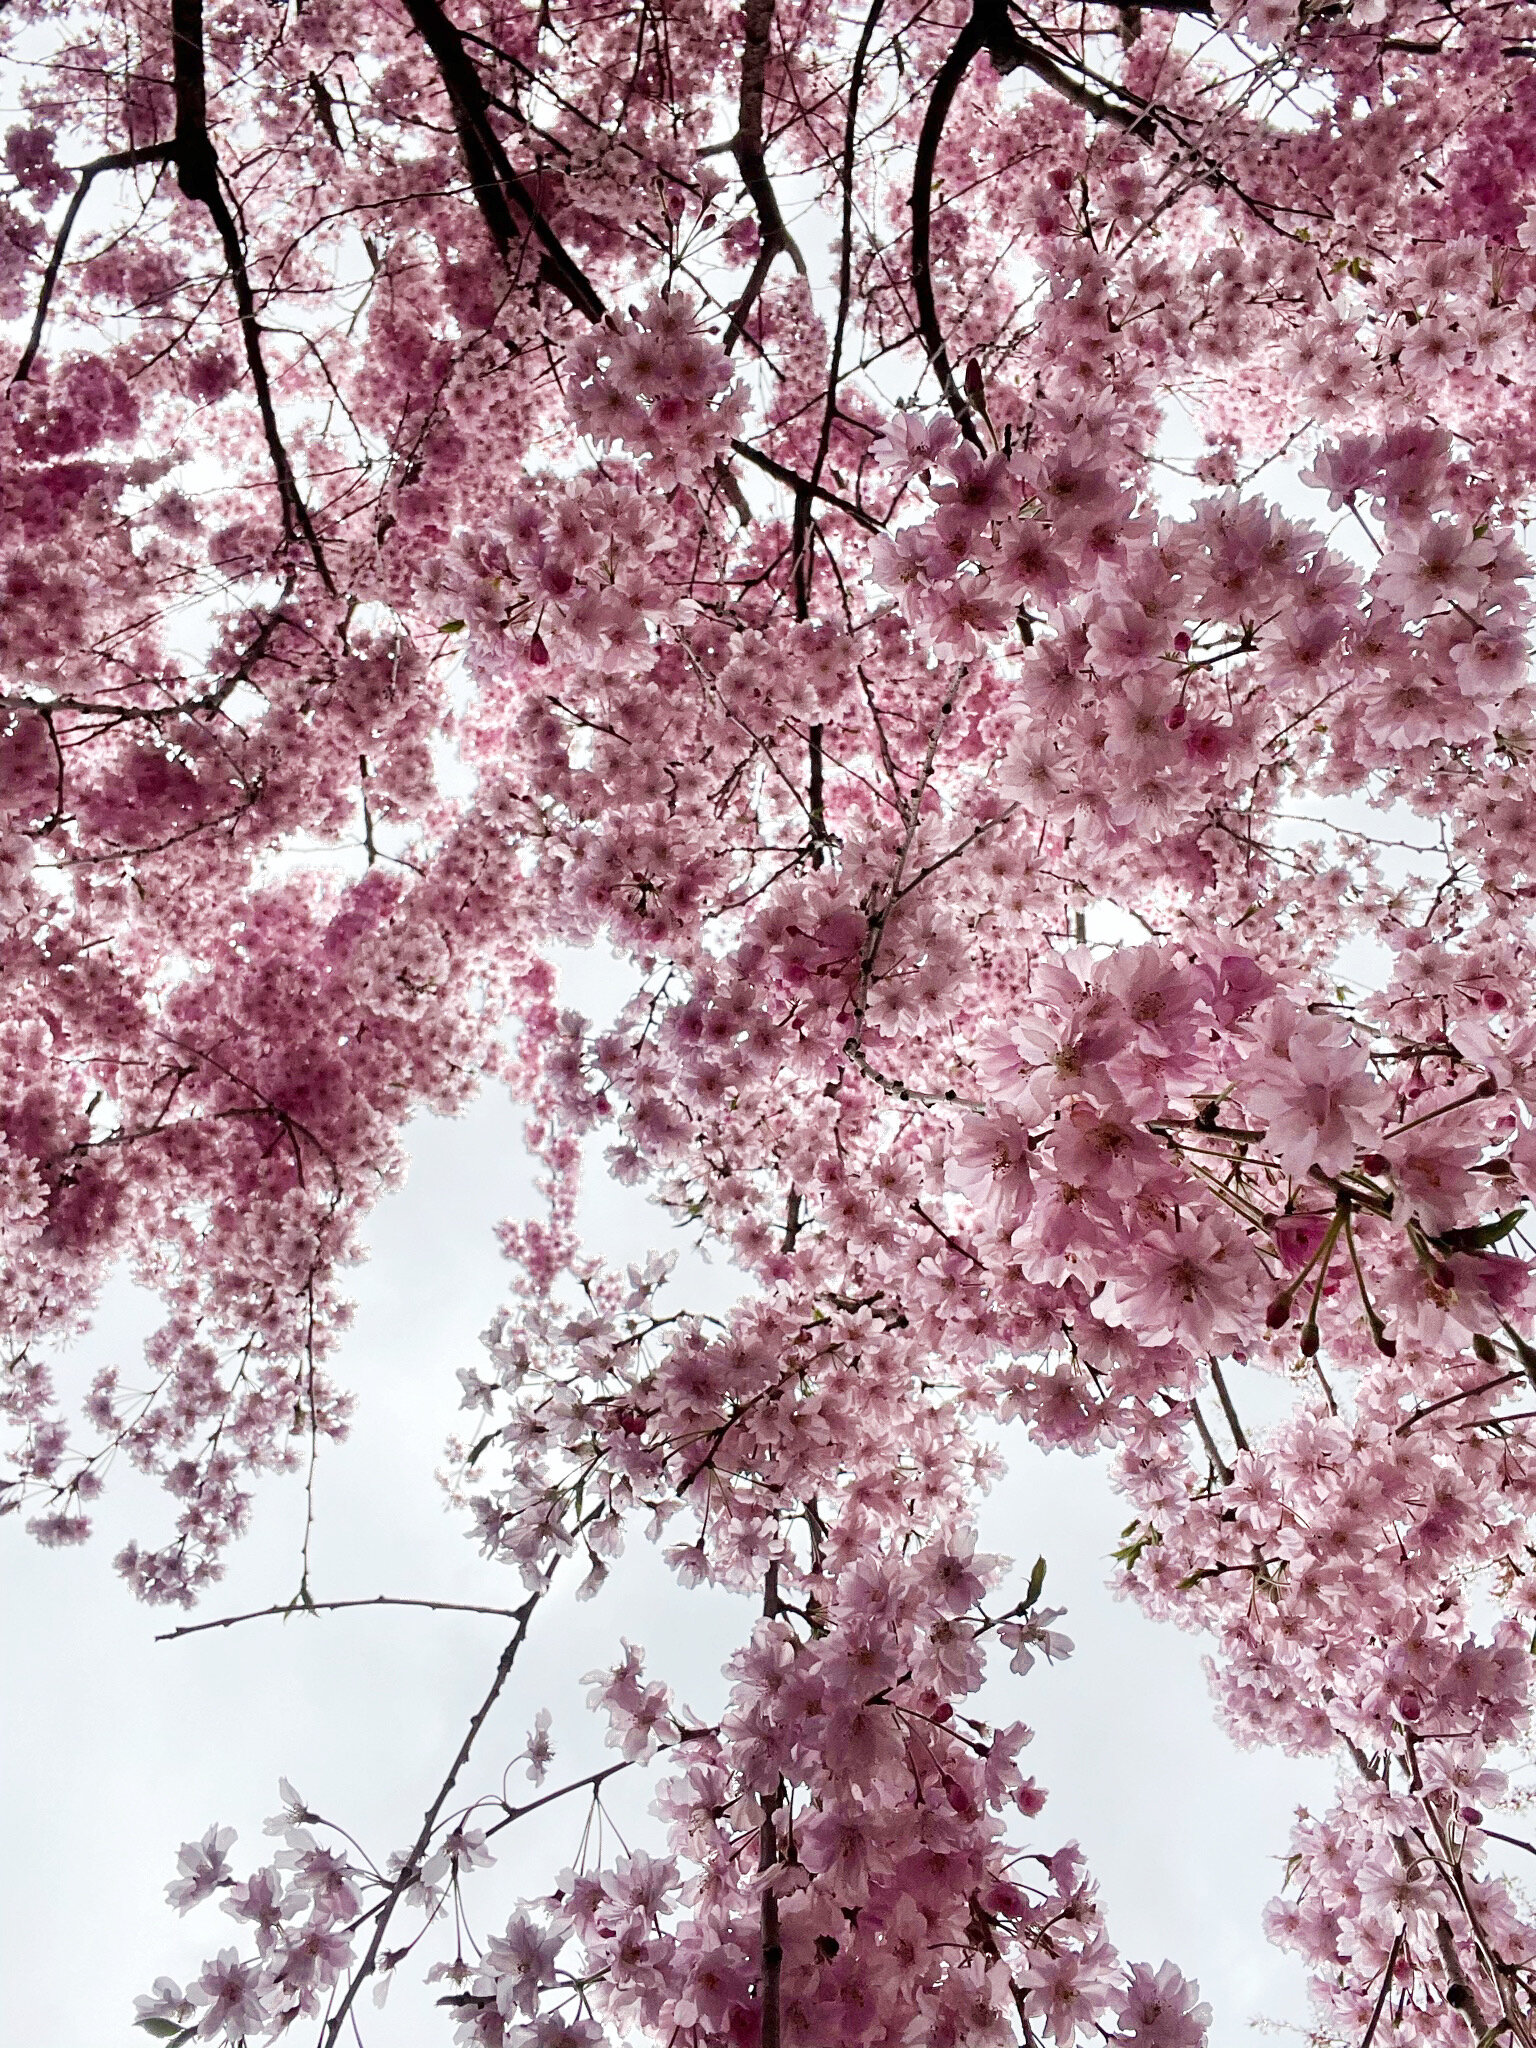 Cherry Blossom Festival, Branch Brook Park